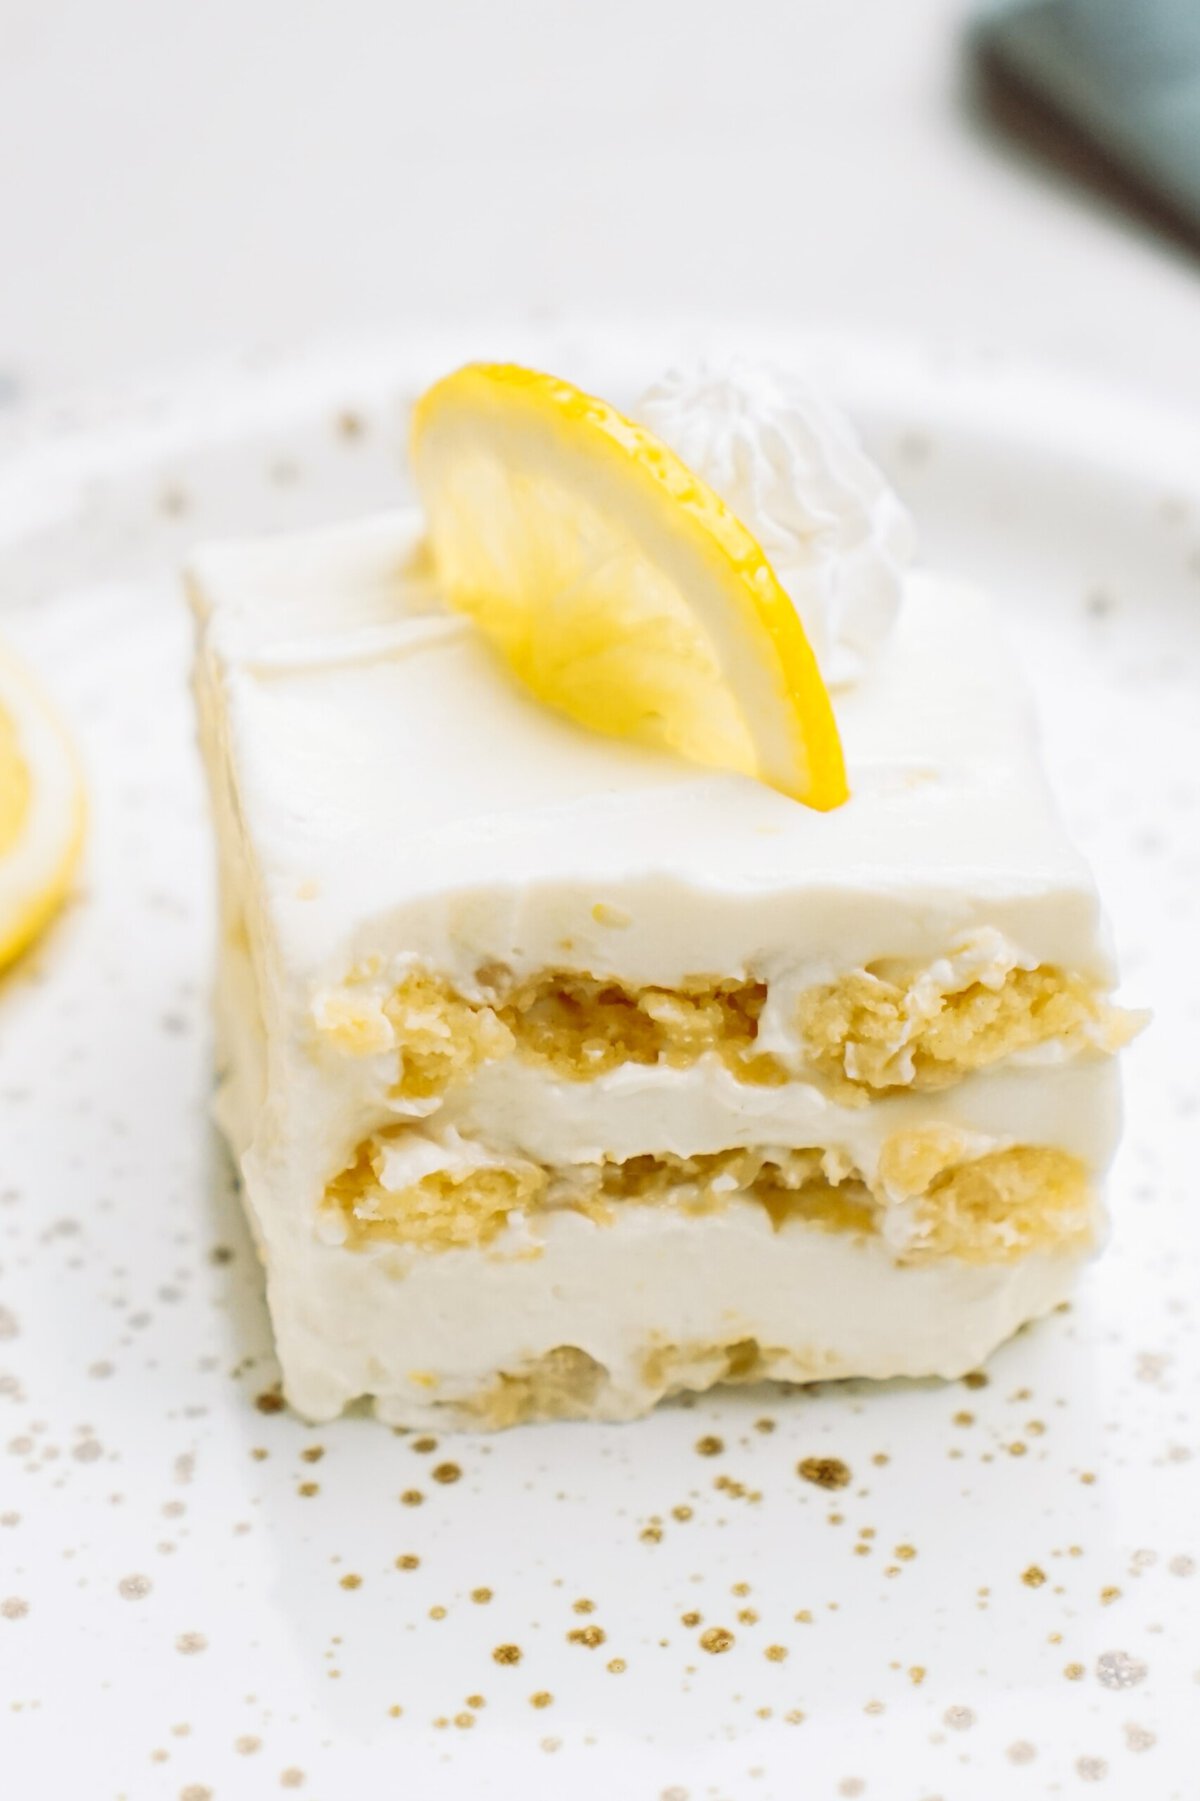 A slice of lemon dessert with creamy layers and a lemon slice garnish on top.